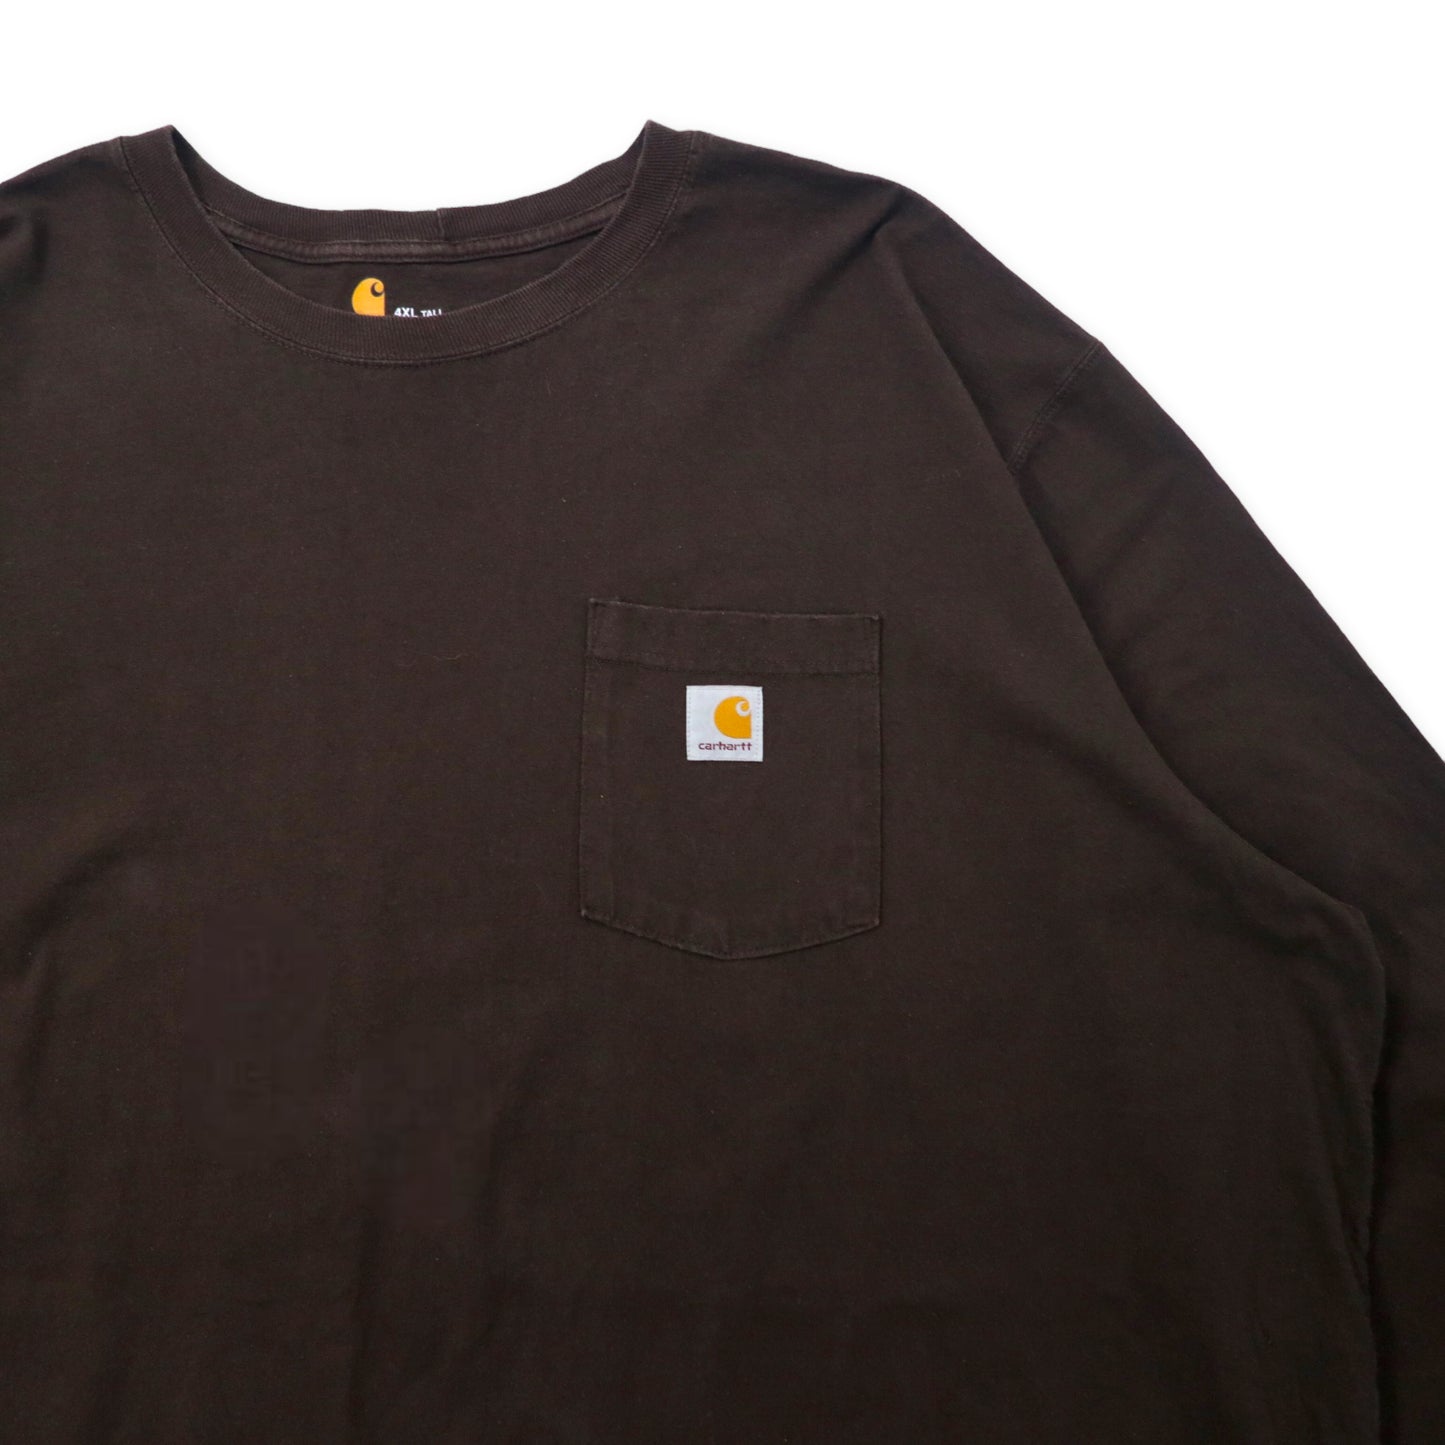 carhartt ビッグサイズ ロングスリーブ ポケットTシャツ ロンT 4XL ブラウン コットン ORIGINAL FIT